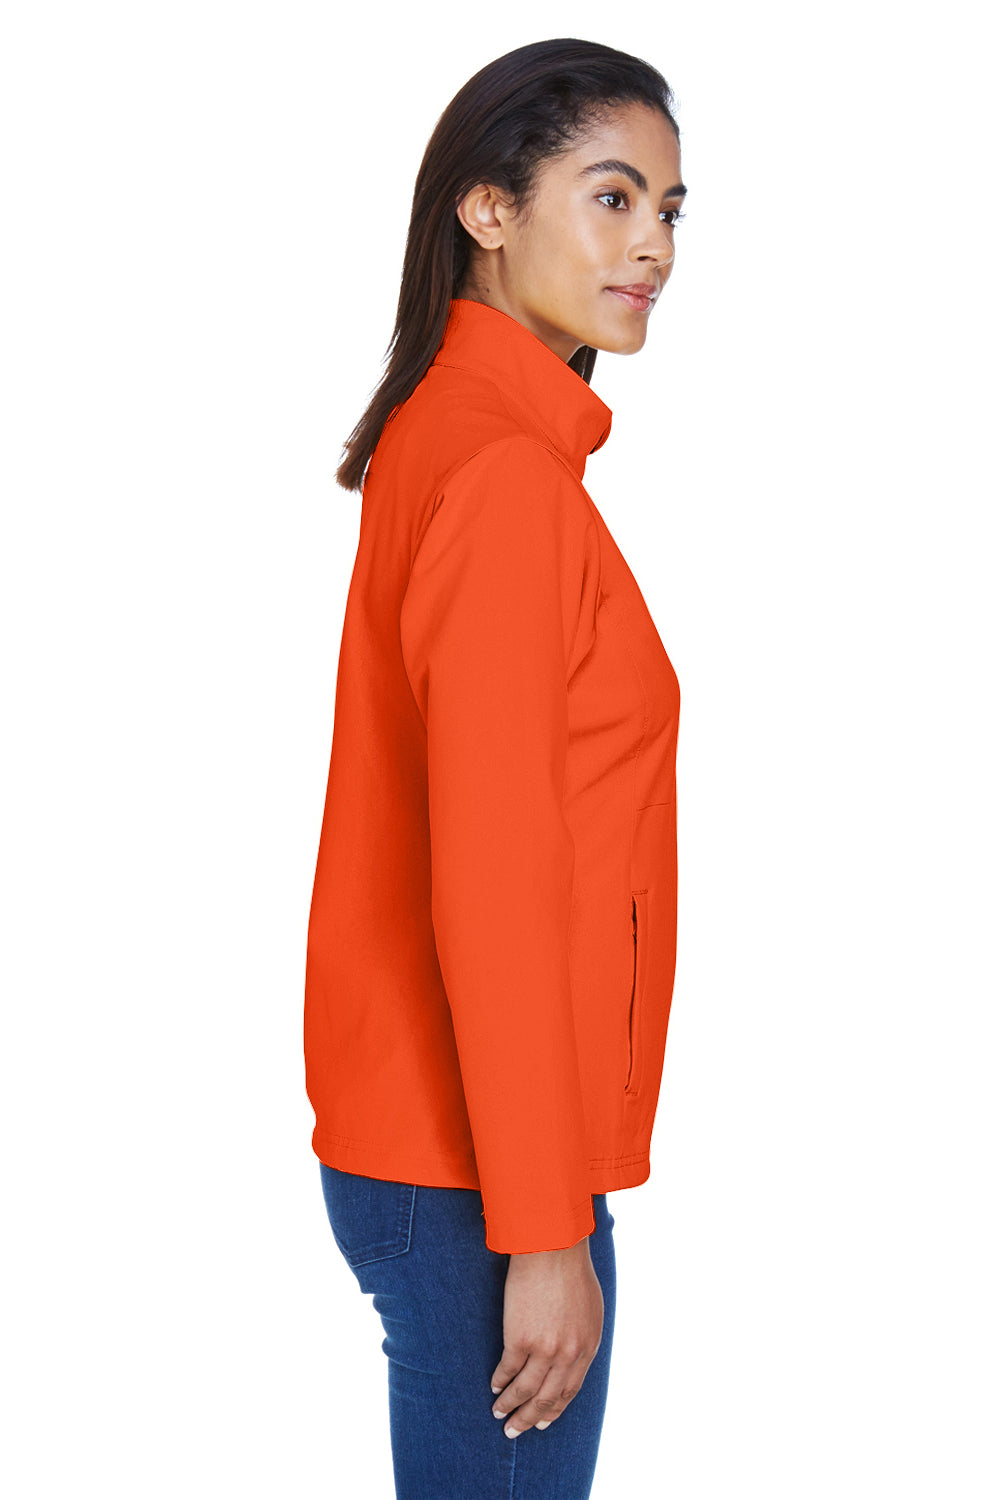 Team 365 TT80W Womens Leader Waterproof Full Zip Jacket Orange Side